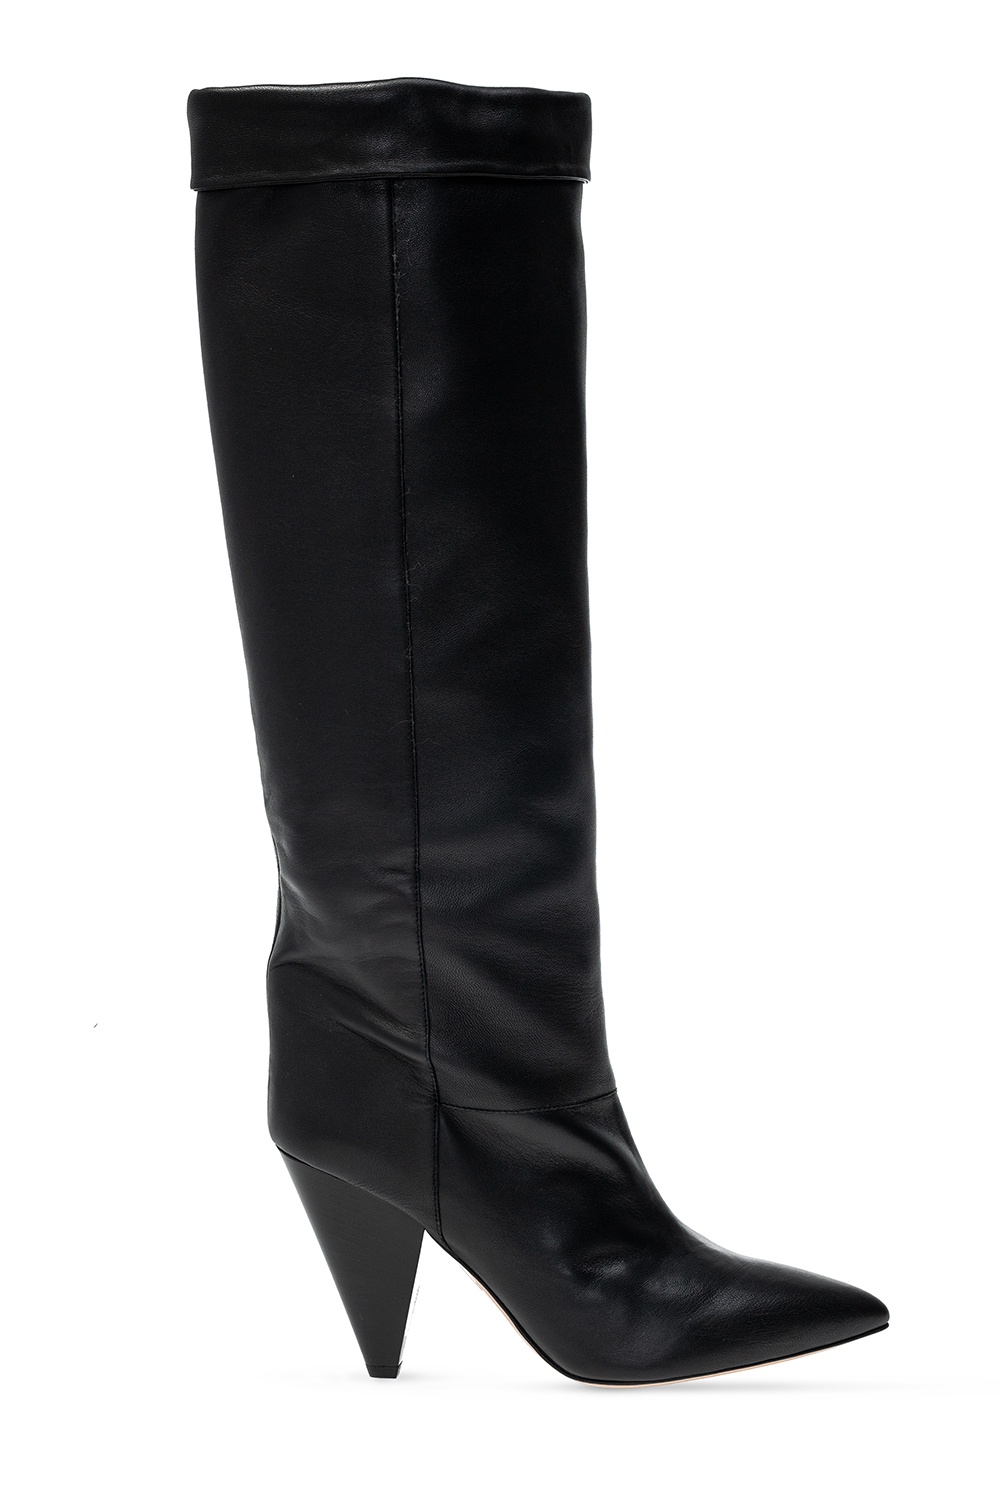 Isabel Marant ‘Conic’ heeled boots